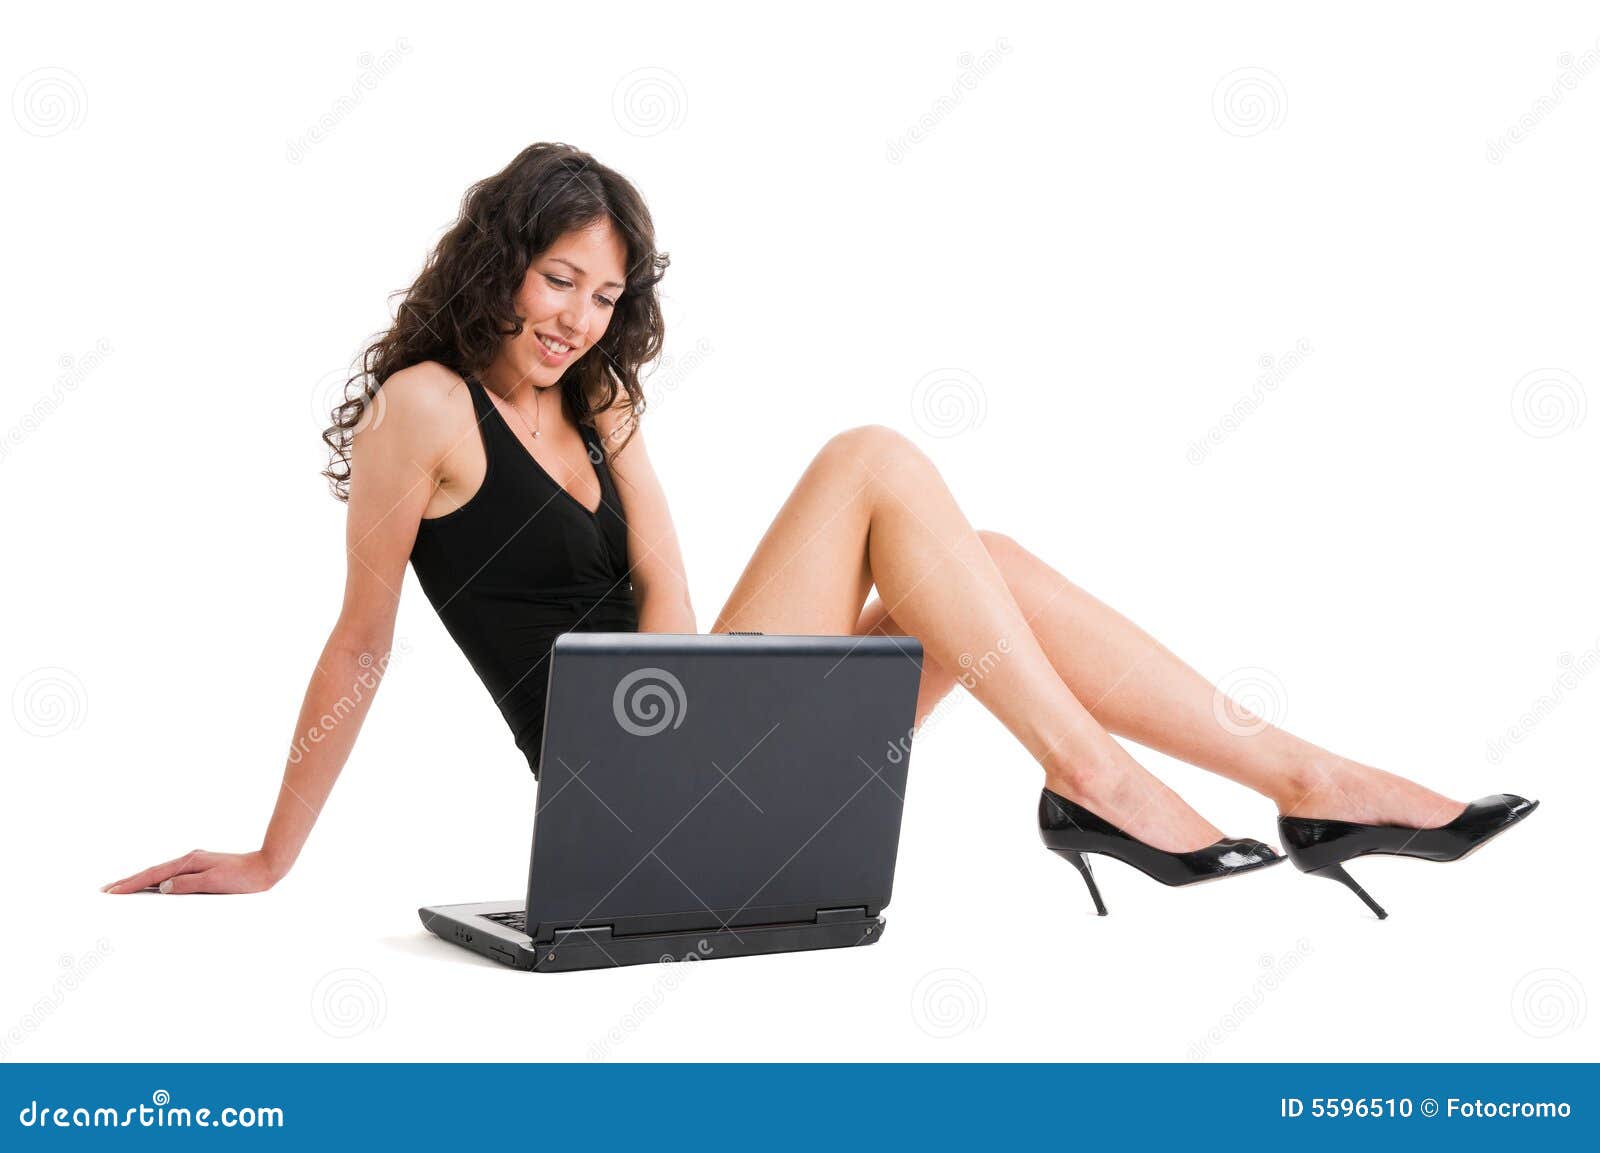 sexy girl working laptop 5596510